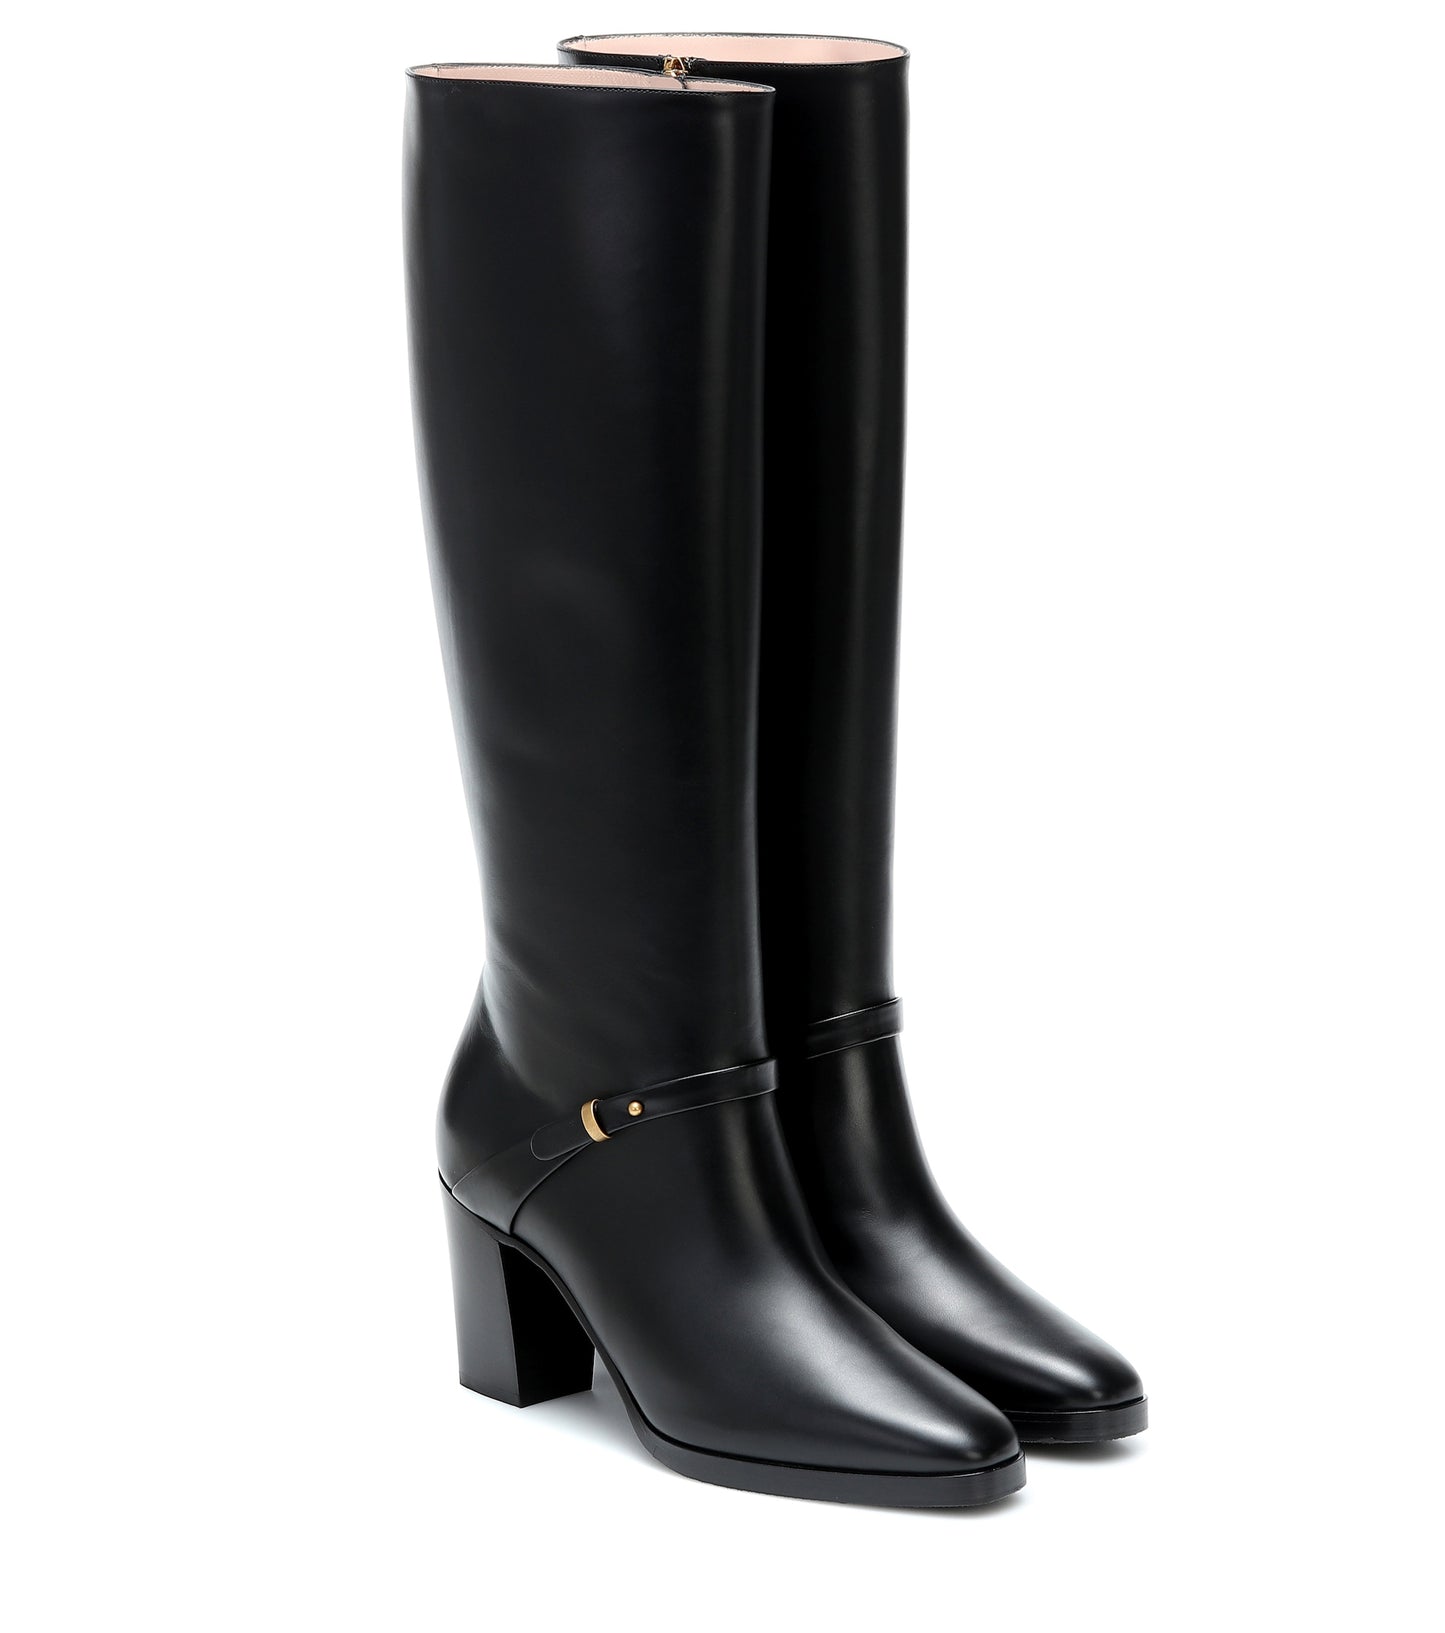 TinaCus Women's Square Toe Handmade Genuine Leather Side Zip Buckle Mid Chunky Heel Classic Knee High Boots